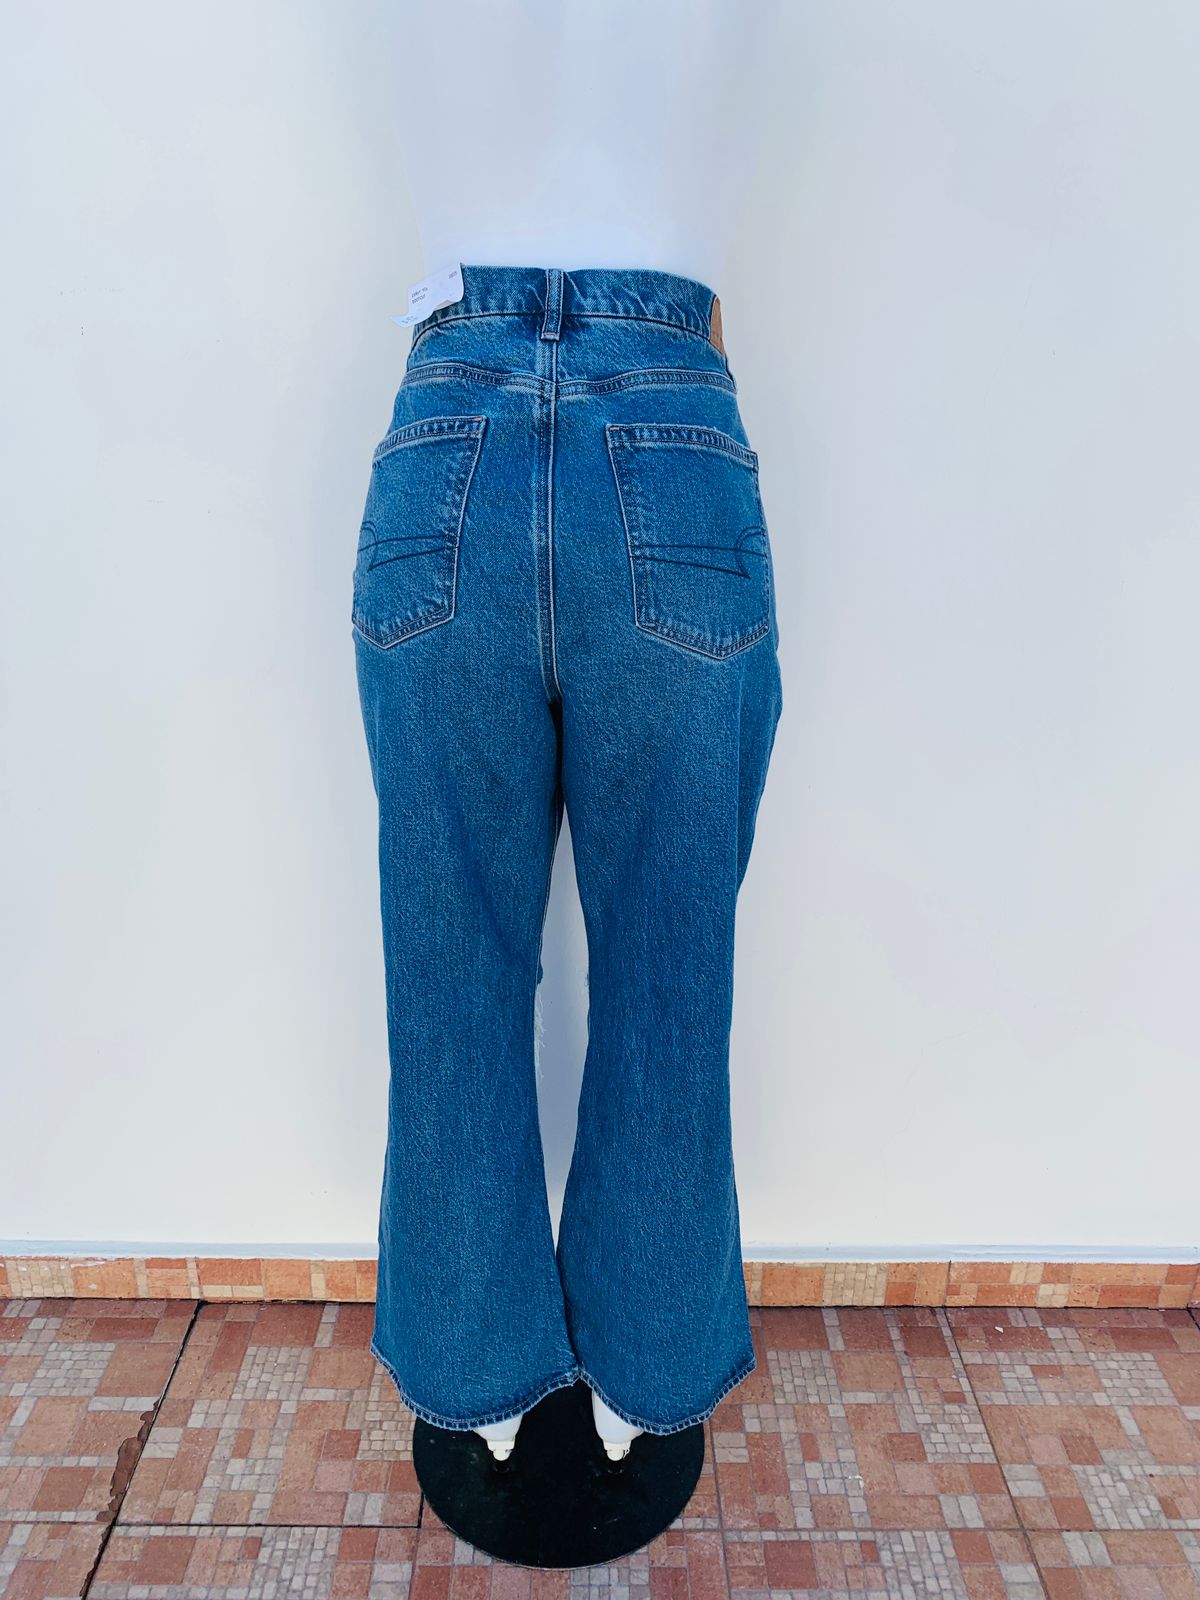 Pantalon jeans American Eagle original al azul con rasgados en las rodillas estilo campana STRETCH CURVY 90s BOOTCUT SHORT HIGH RISE